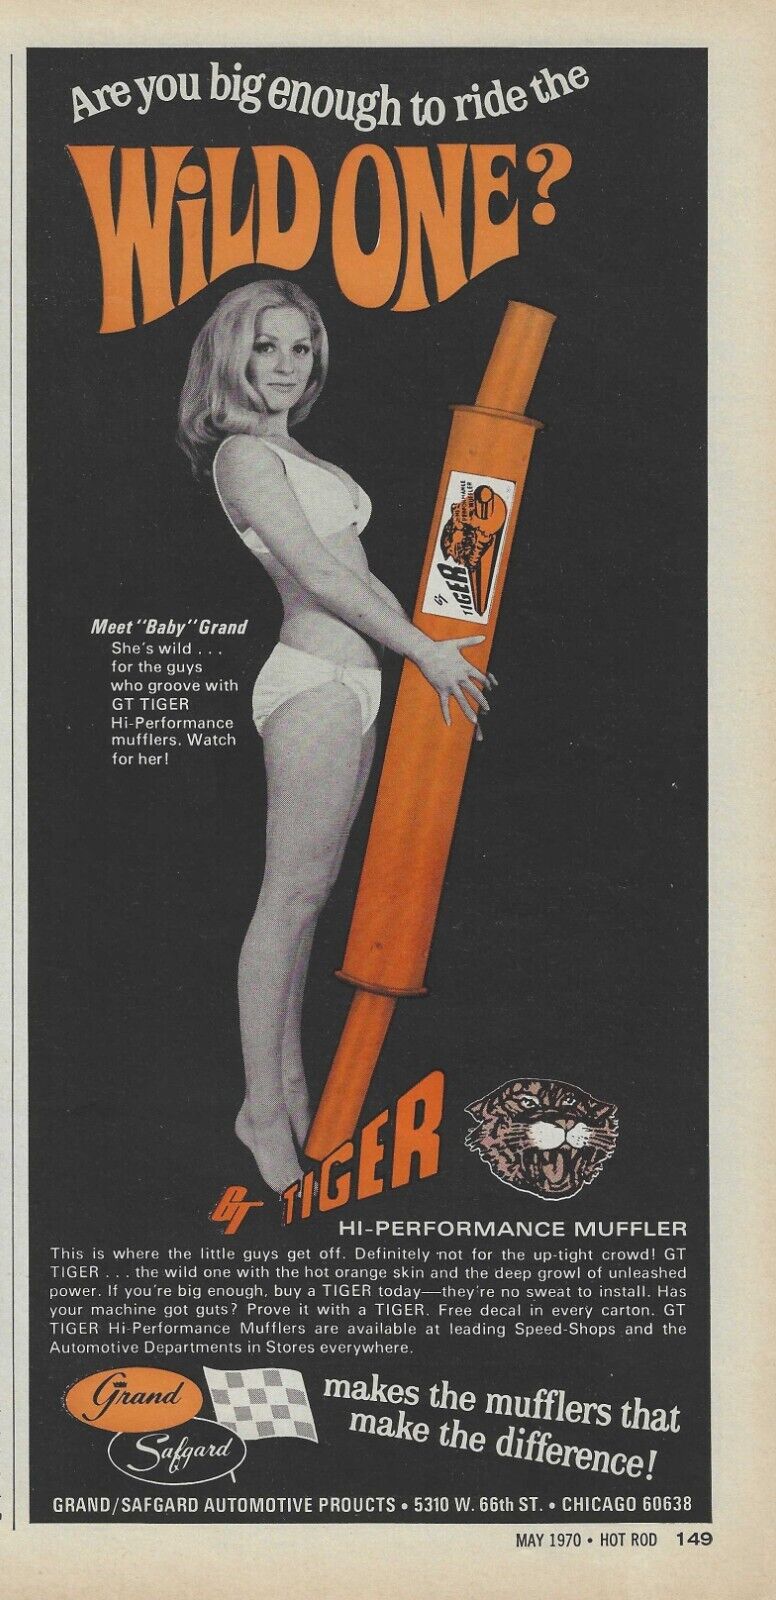 1970 Grand Safgard Magazine Ad GT Tiger Performance Muffler Pretty Bikini Girl 7